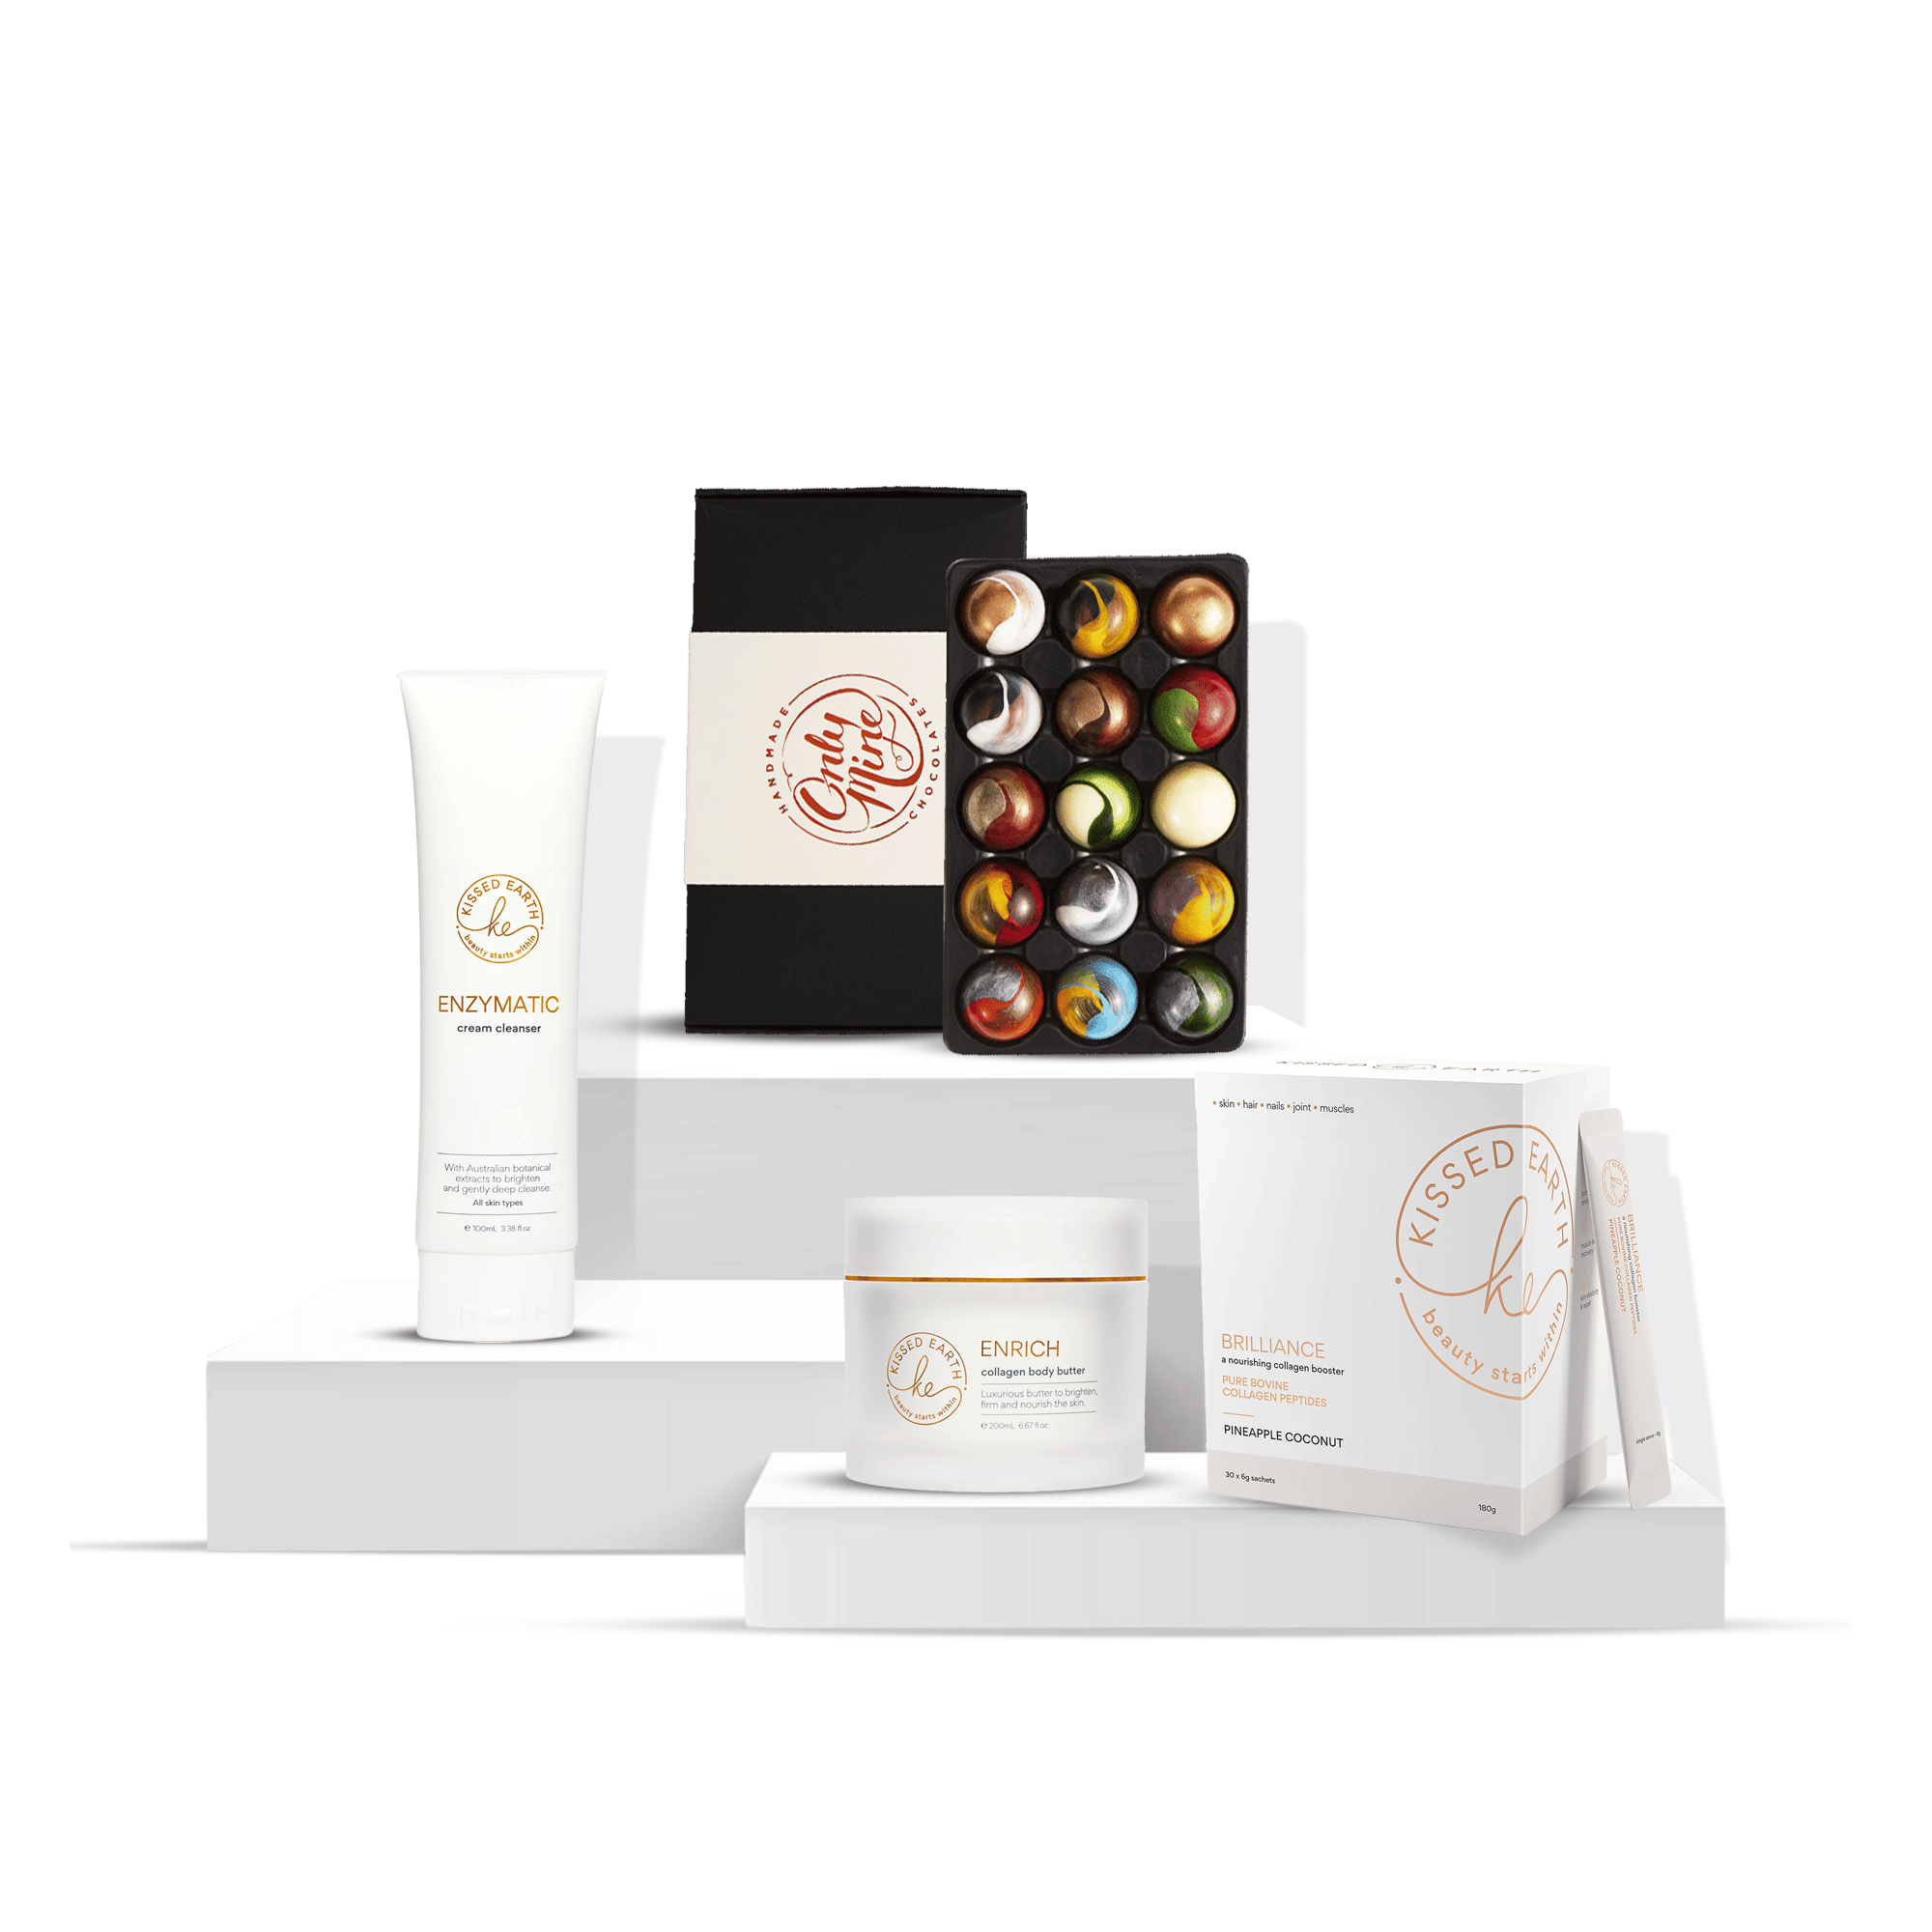 Premium Skin Care and Chocolate Gift Pack